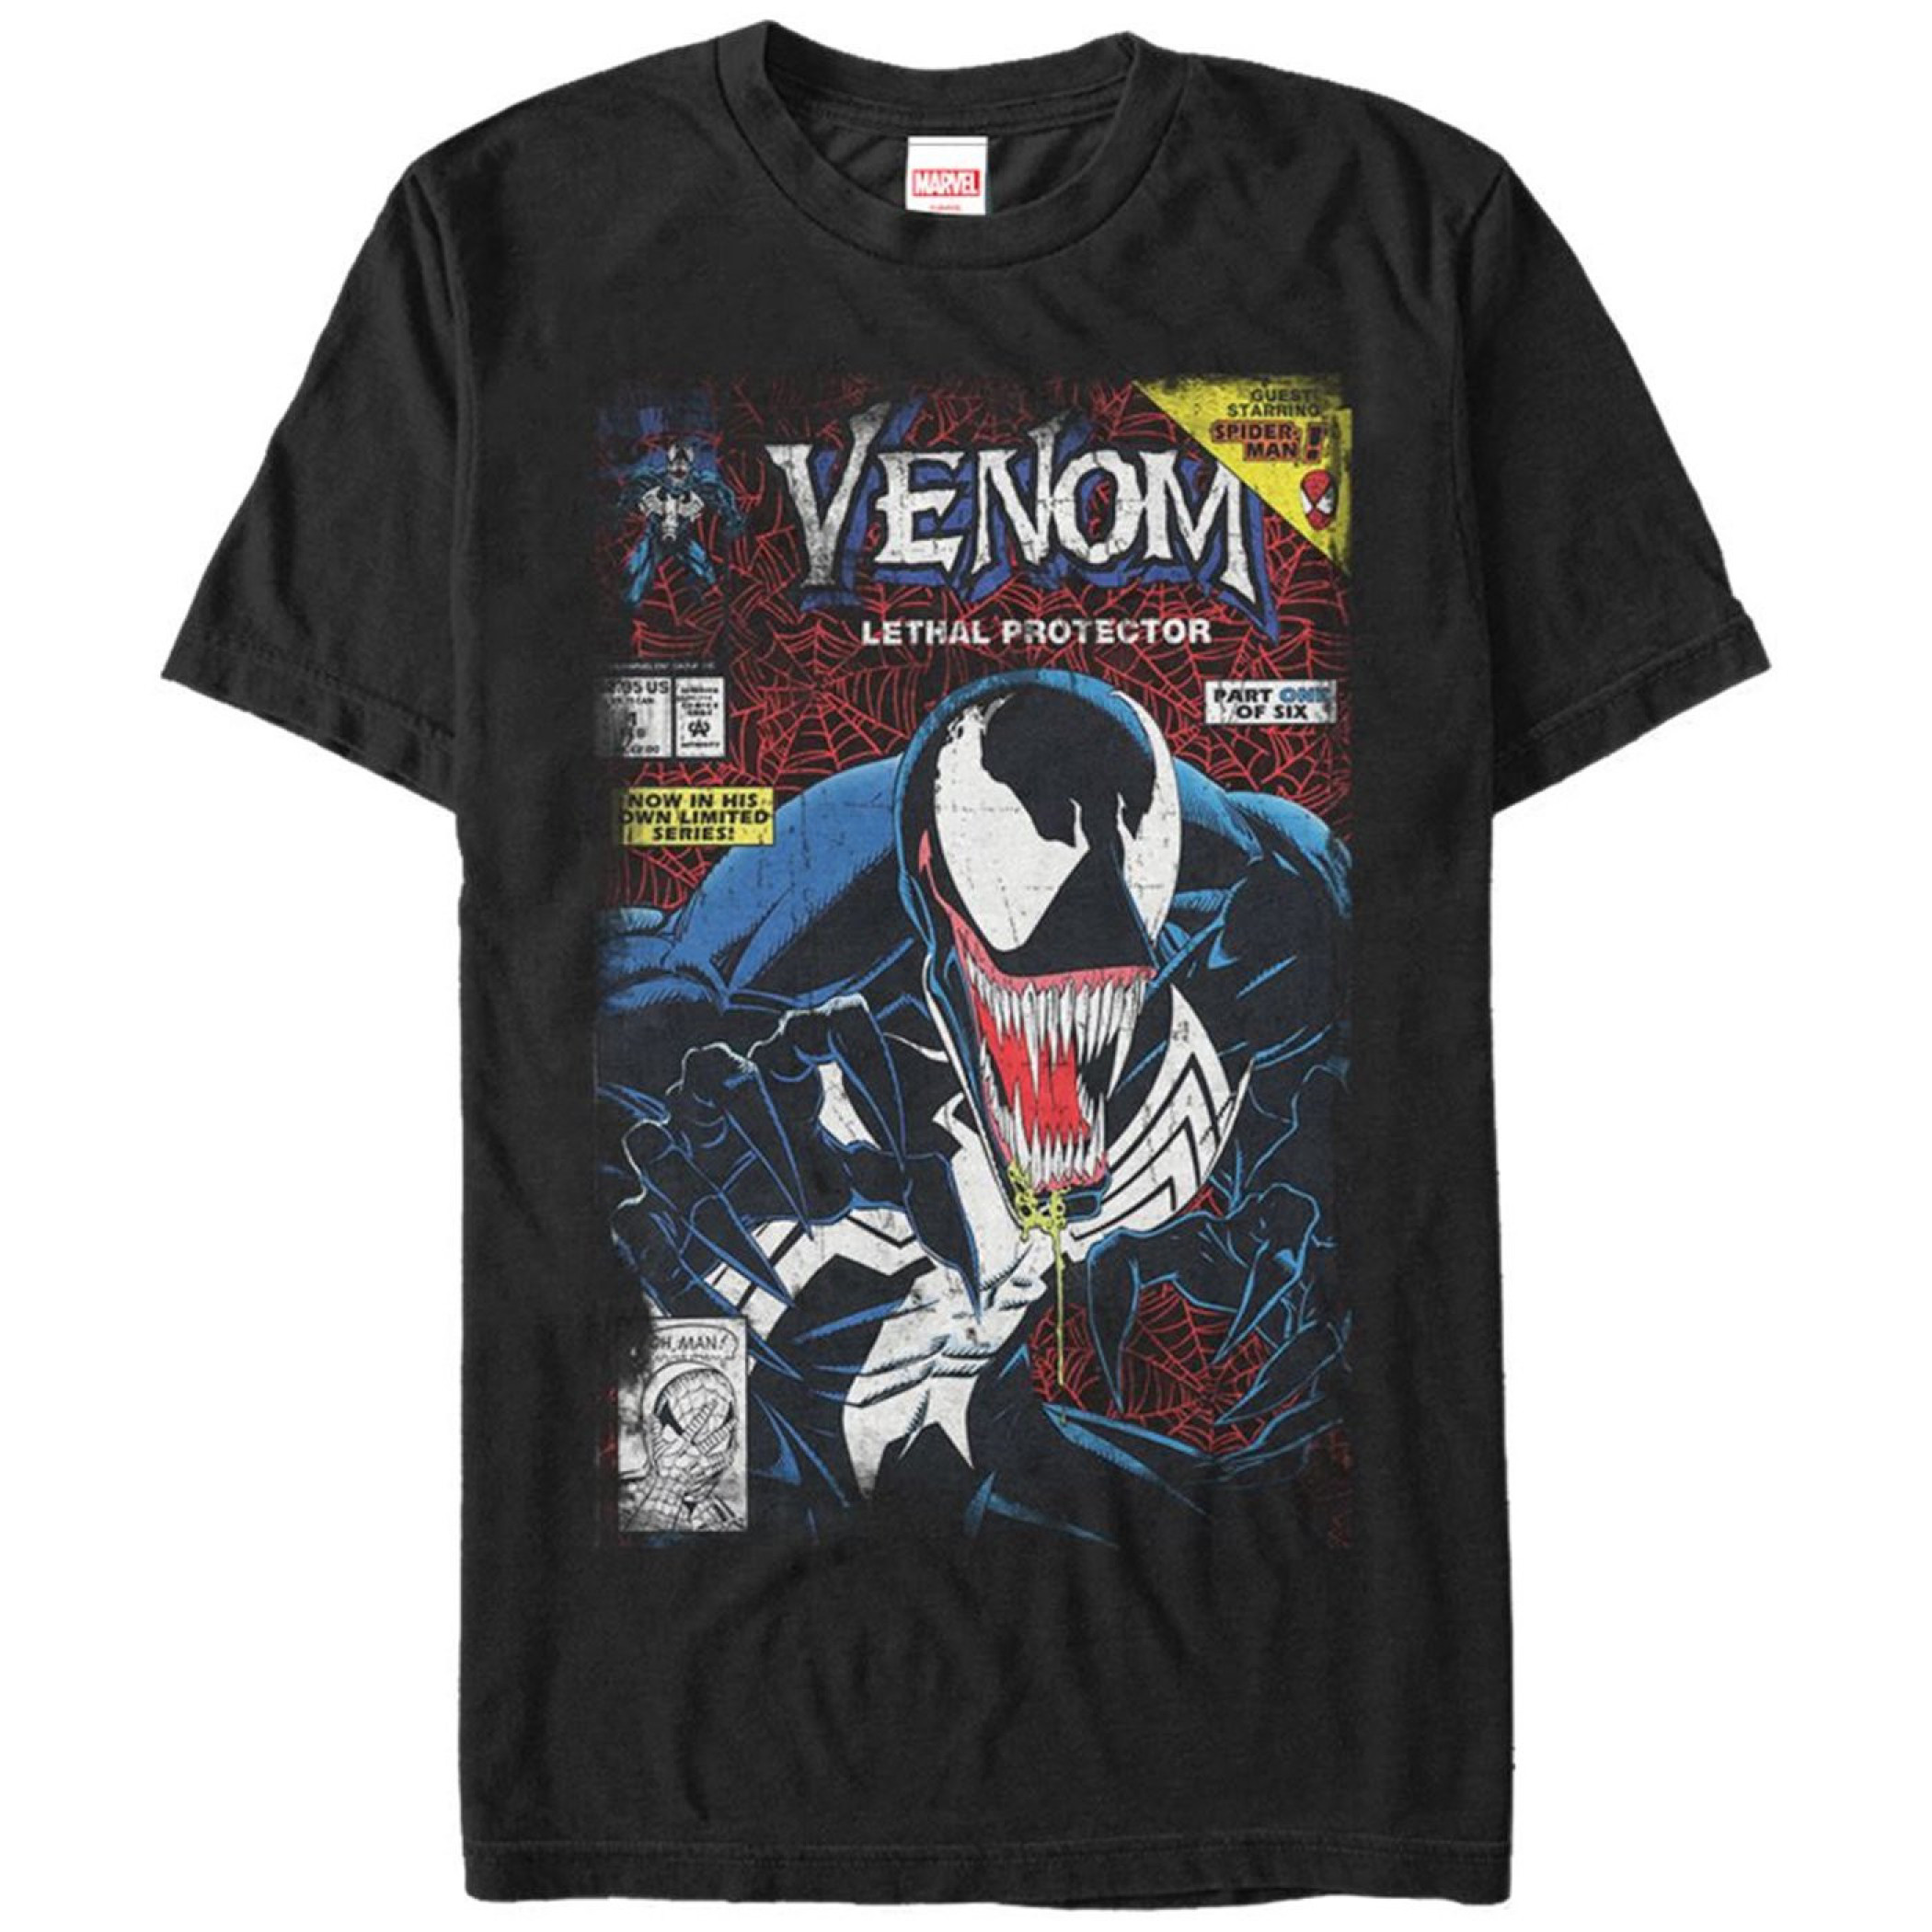 Venom Lethal Protector Comic Cover Men's T-Shirt